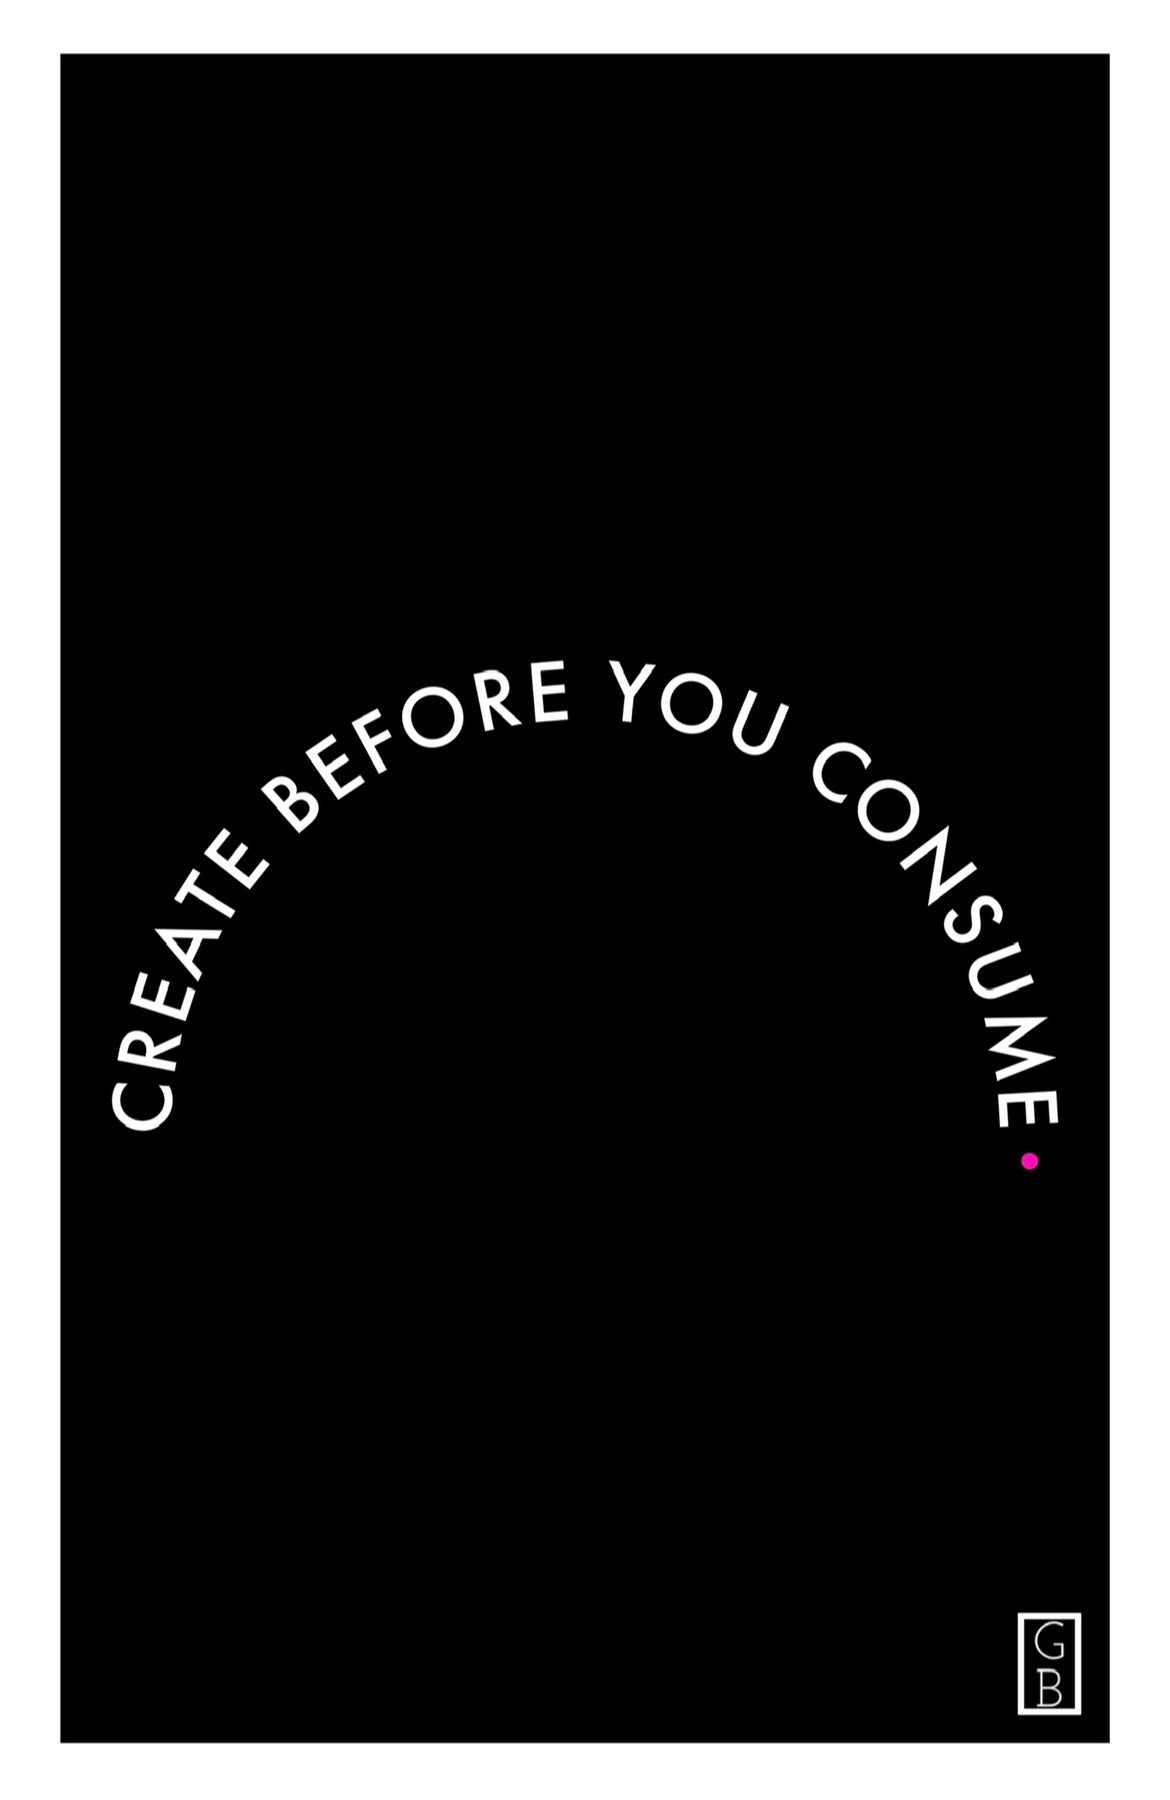 'Create before you consume' A4 print